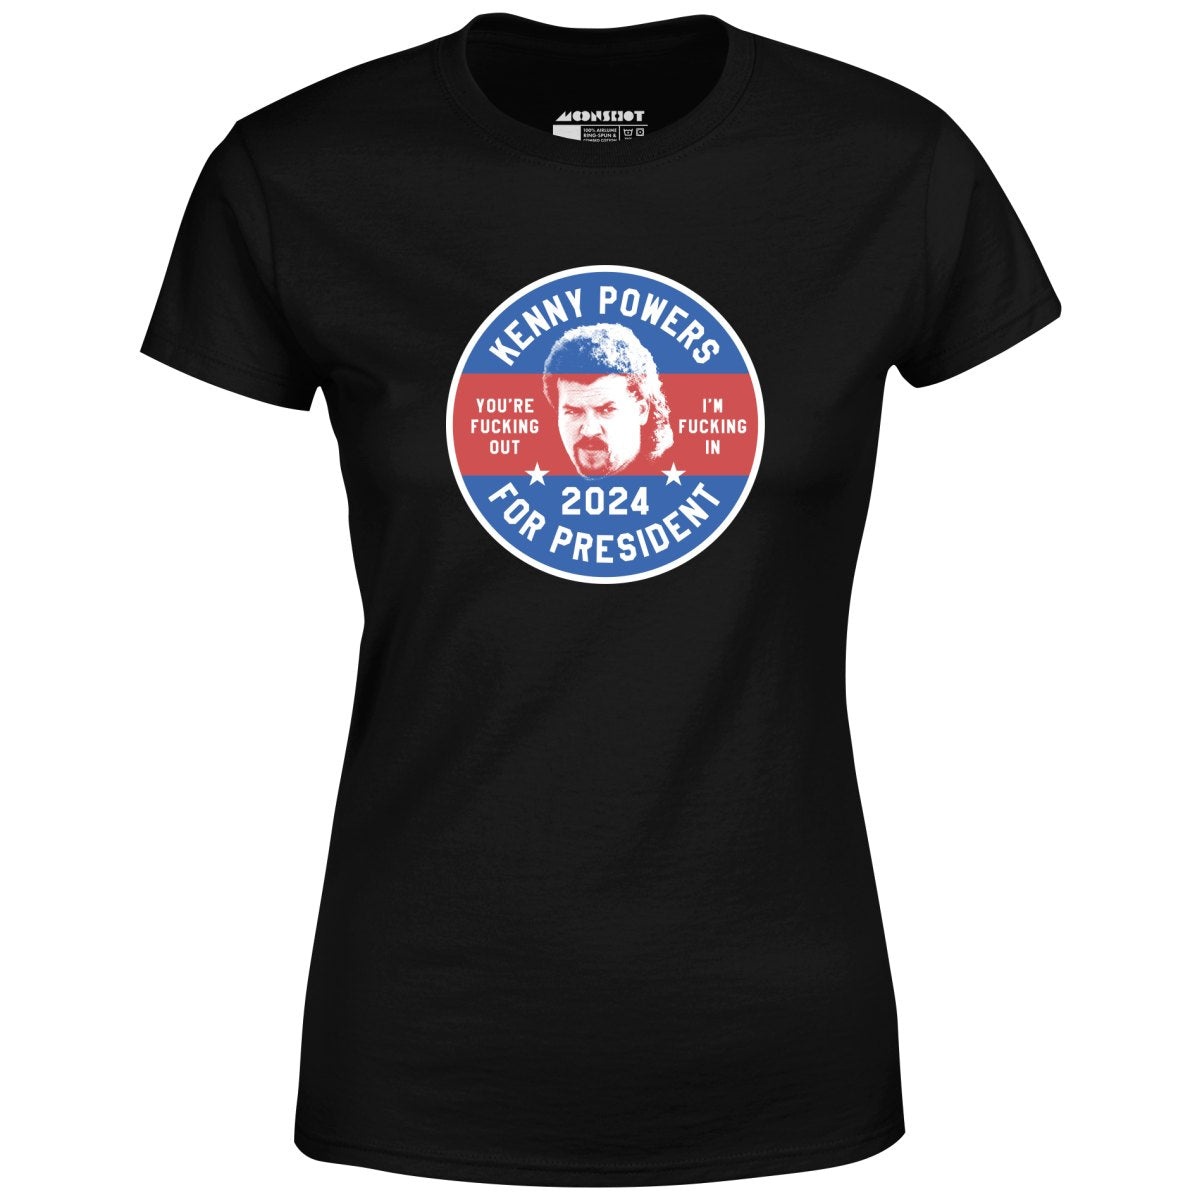 Kenny Powers 2024 - Women's T-Shirt